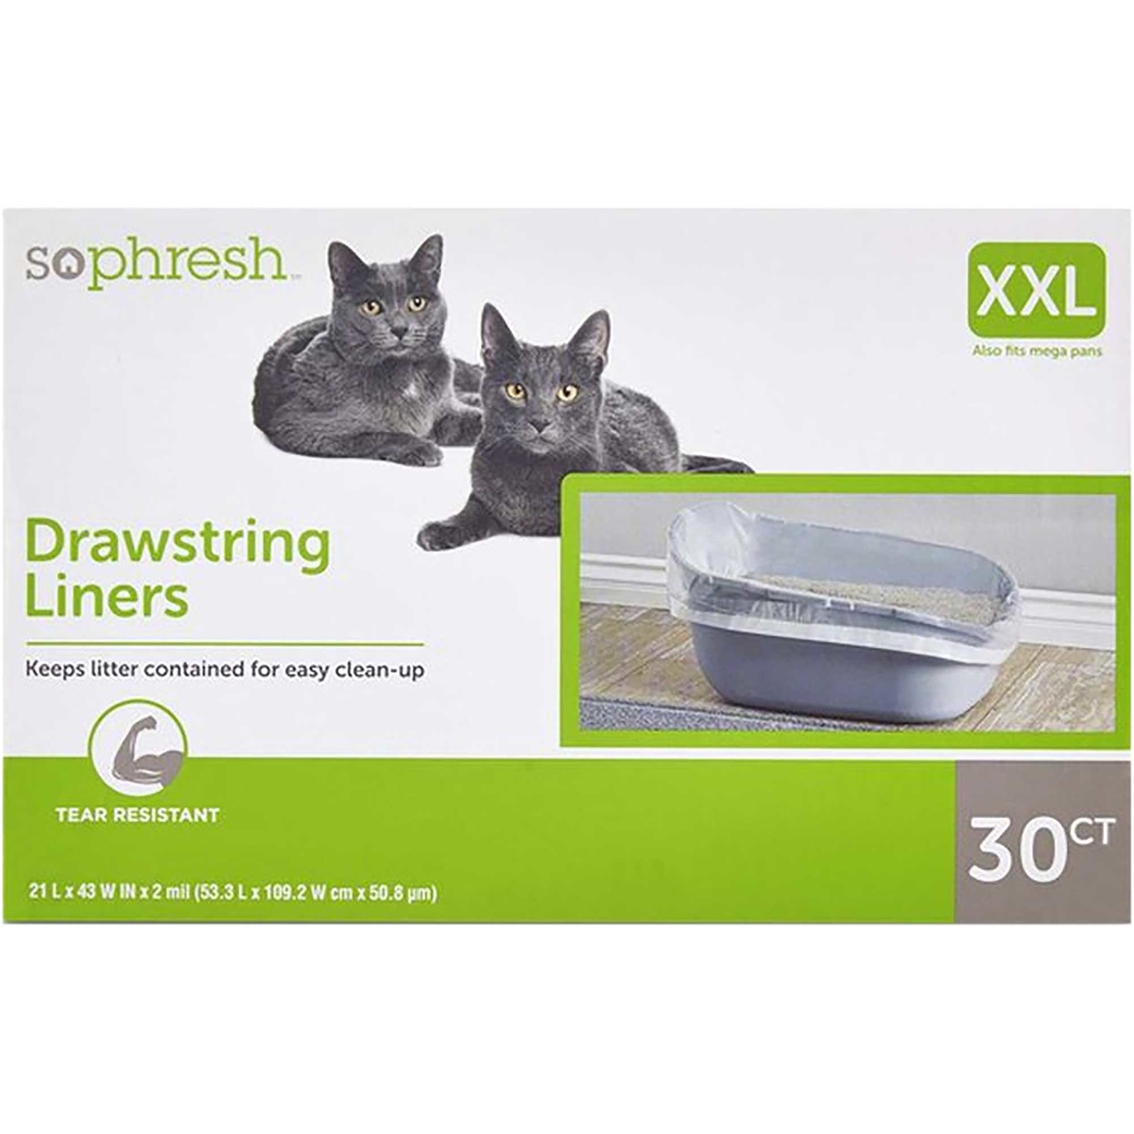 So Phresh Drawstring Cat Litter Box Liners 